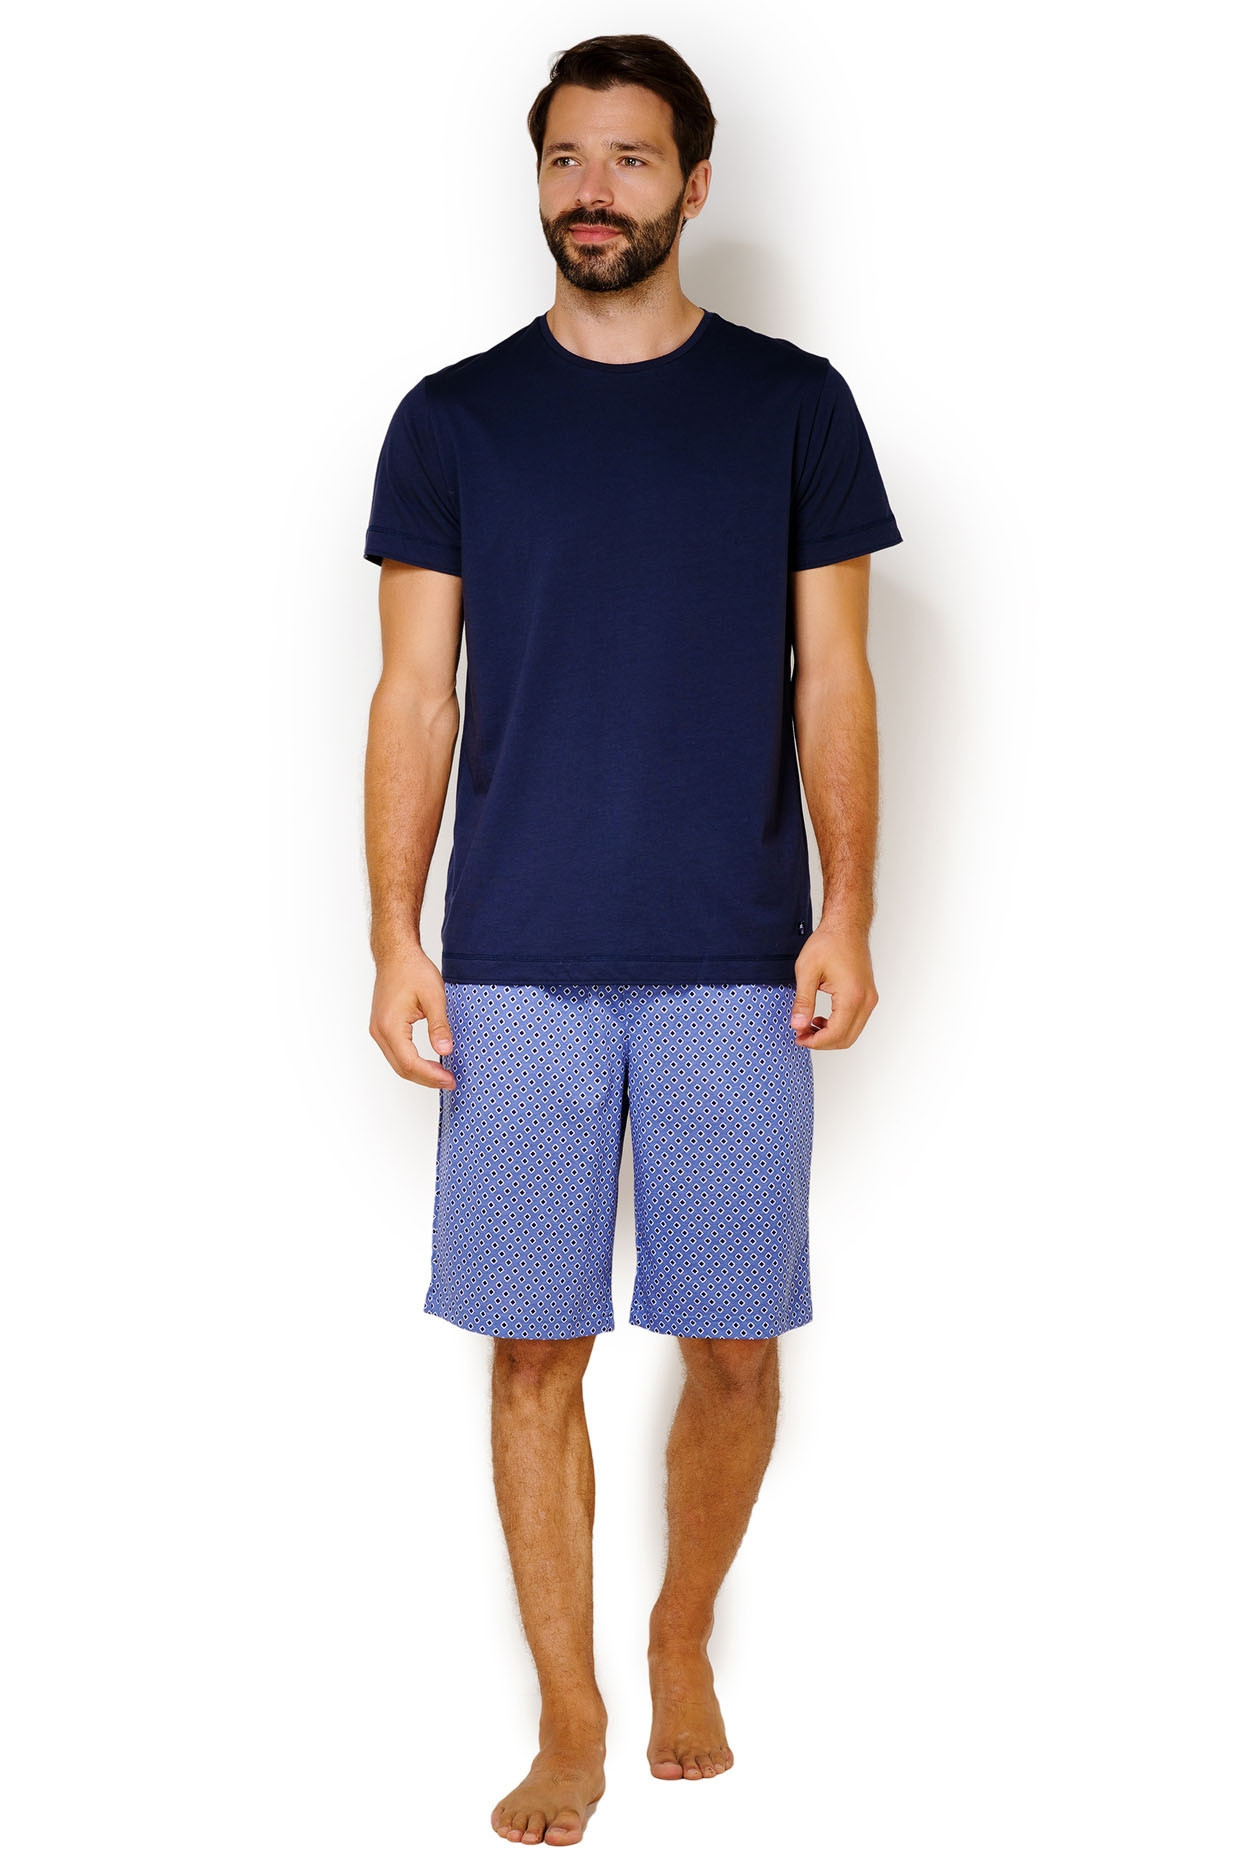 Pánské pyžamo model 16244059 - Jockey Velikost: M, Barvy: tm.Modrá